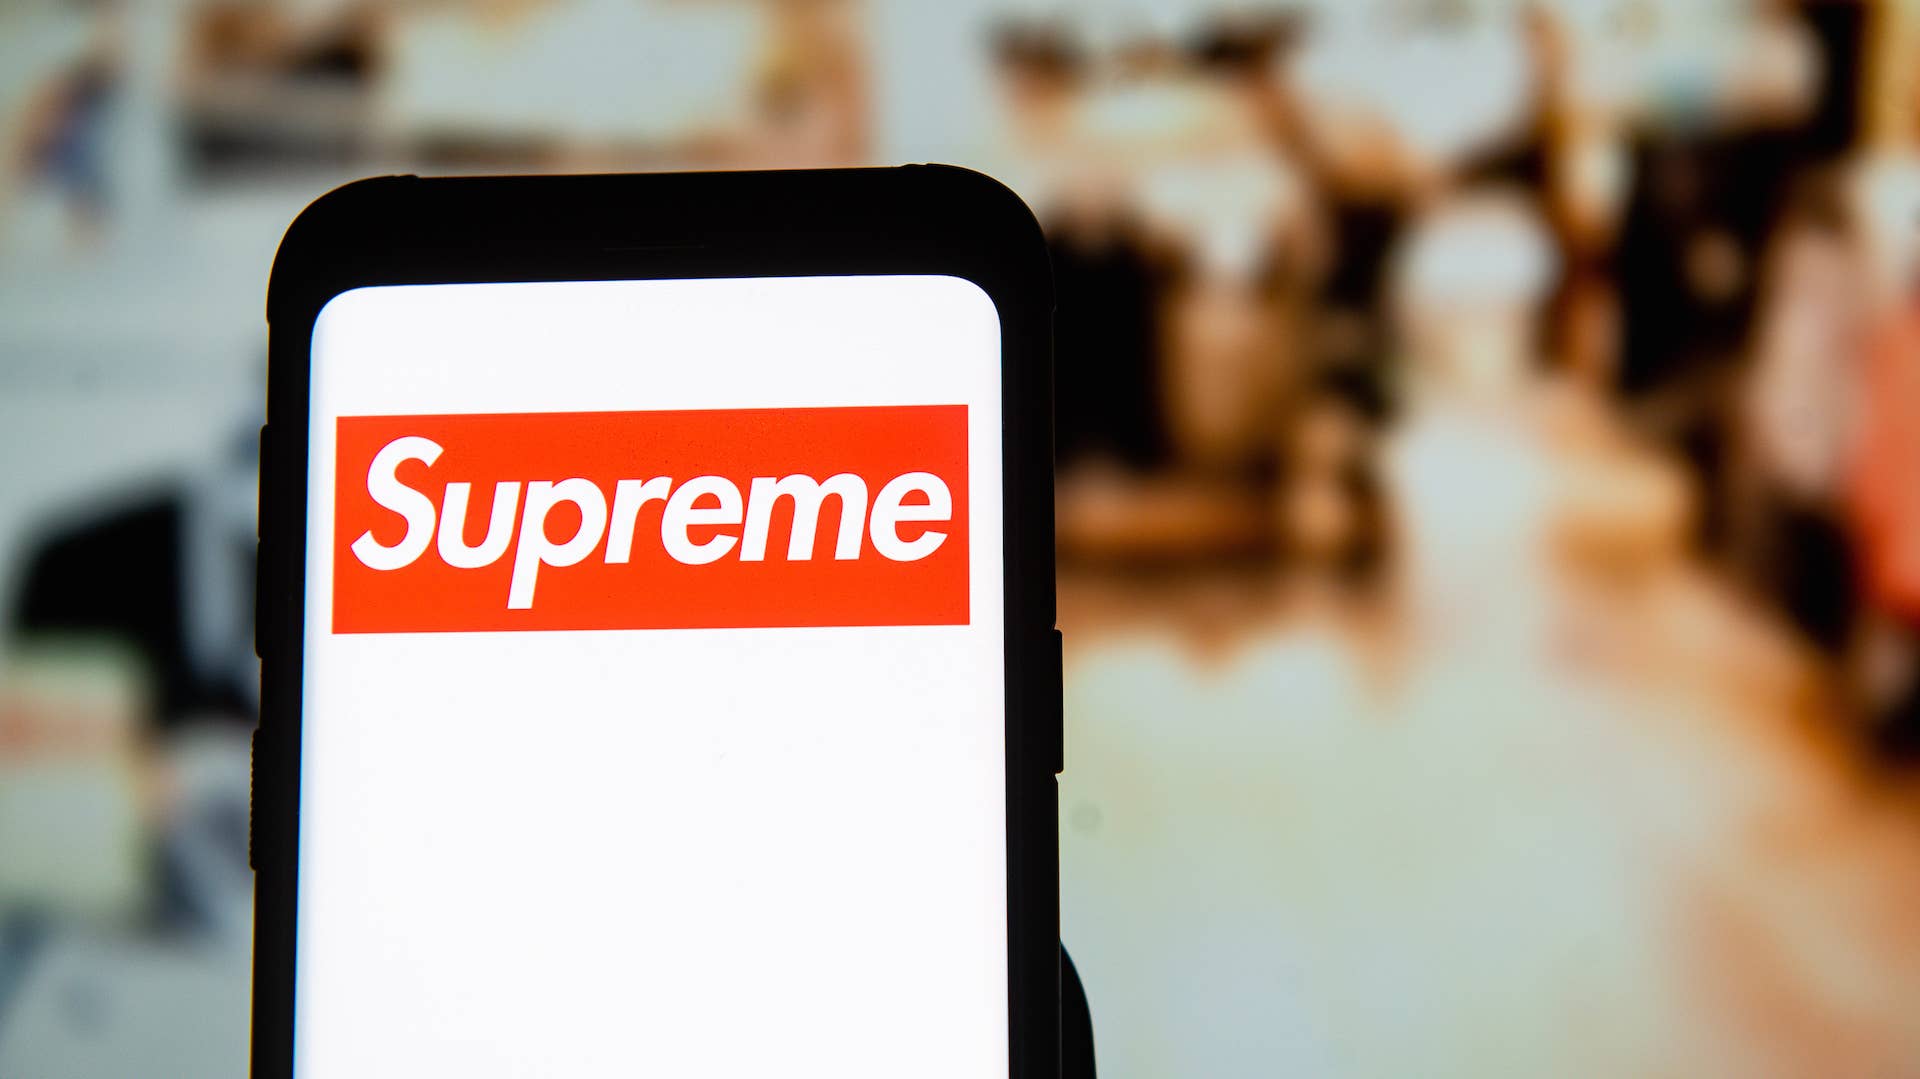 Supreme logo seen displayed on a smartphone